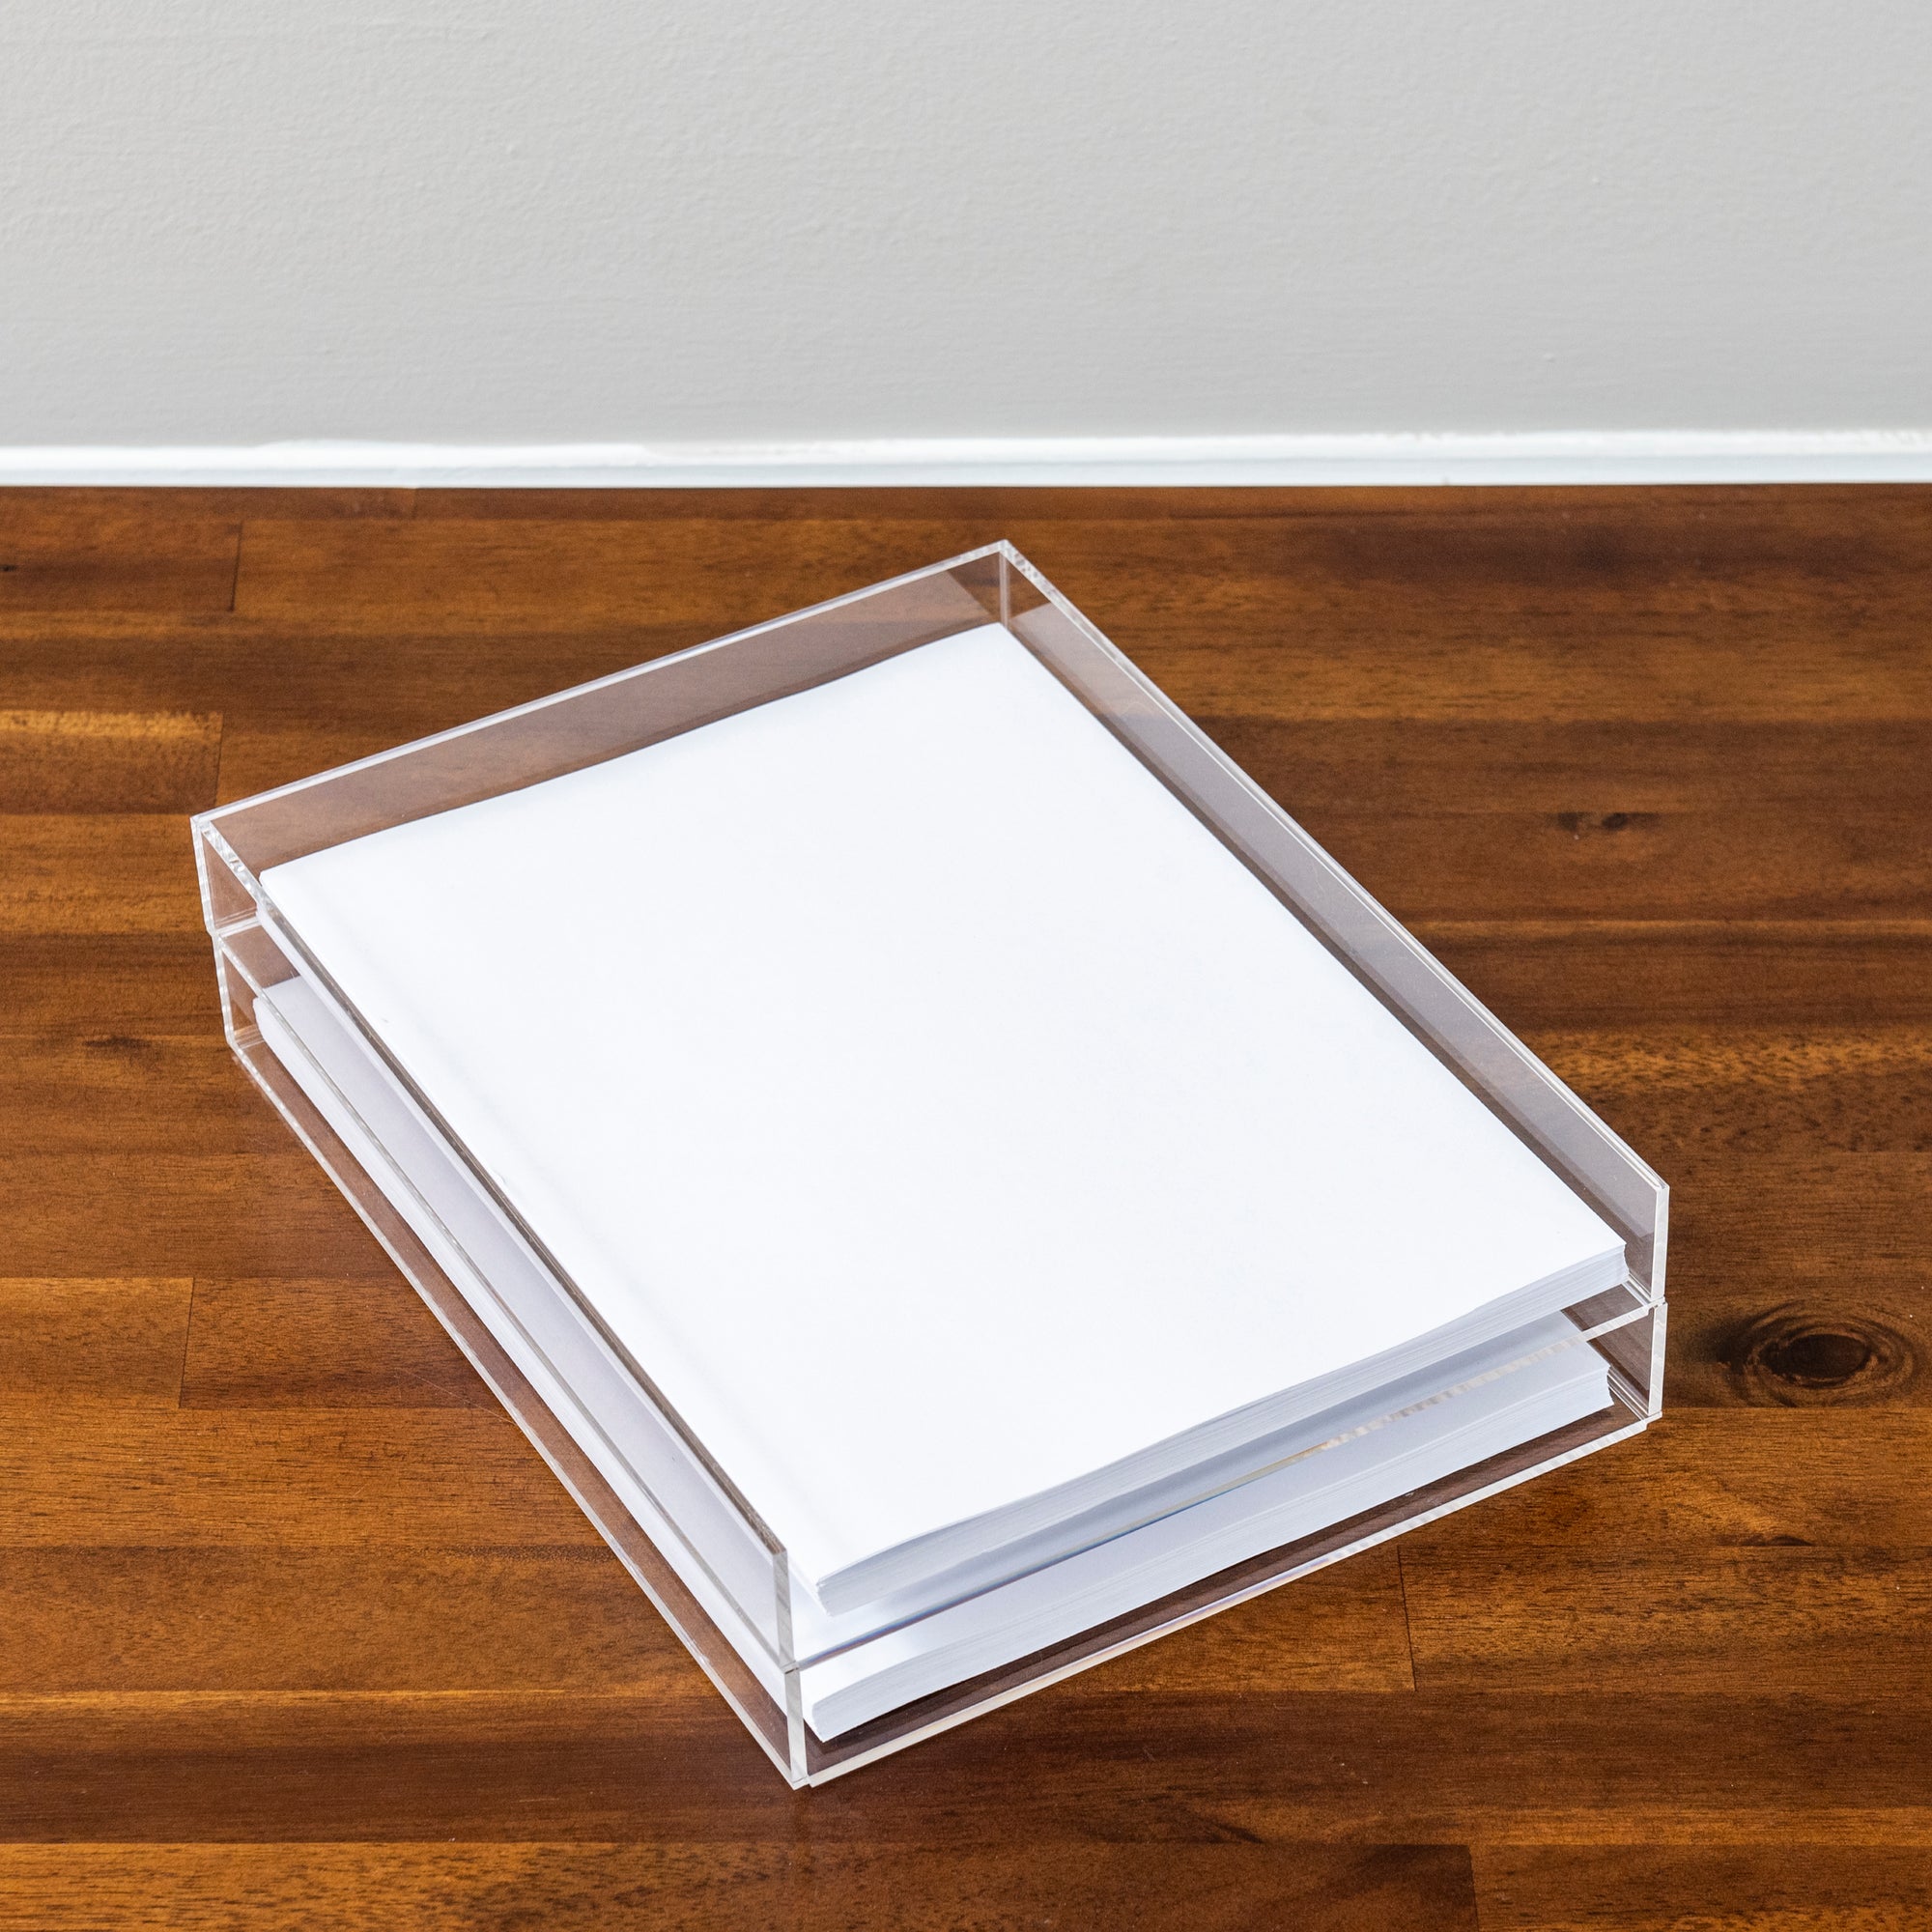 acrylic paper tray for desk organization 